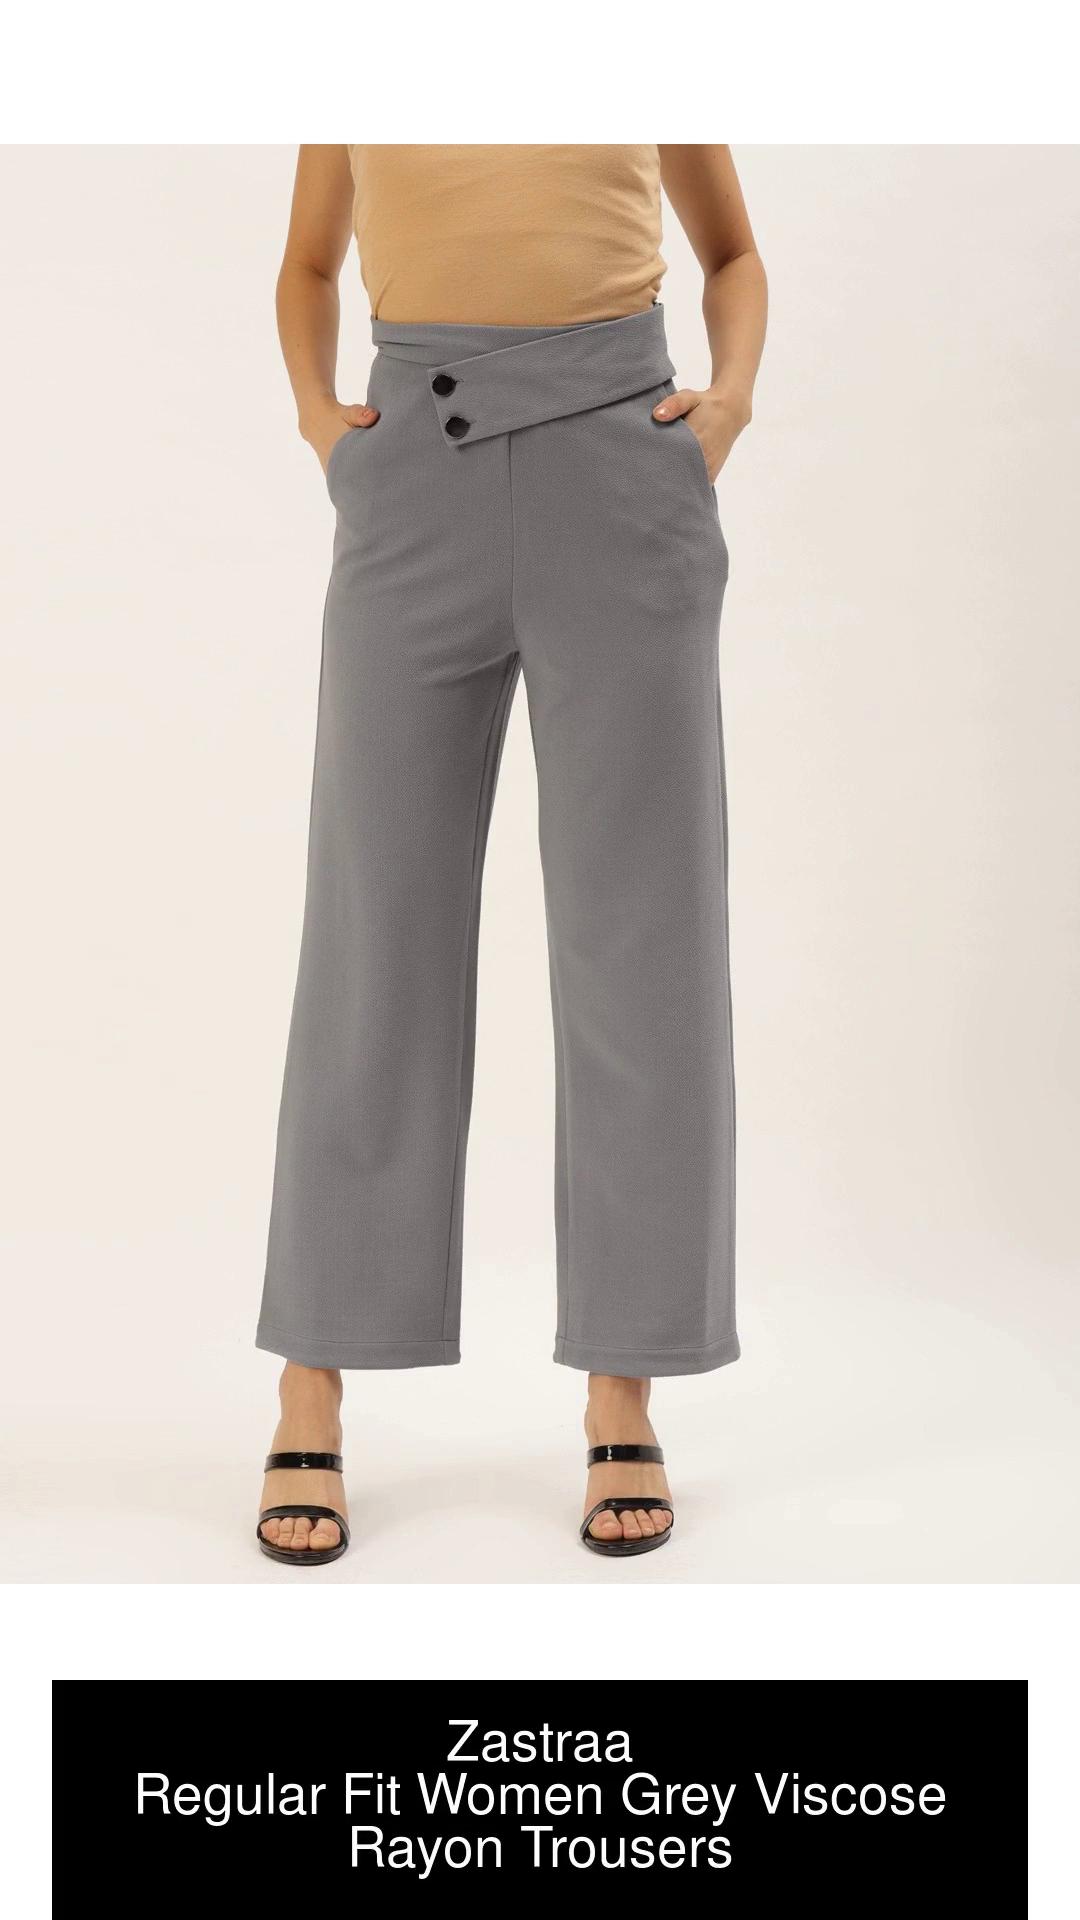 EVERDION Flared Women Grey Trousers  Buy EVERDION Flared Women Grey  Trousers Online at Best Prices in India  Flipkartcom